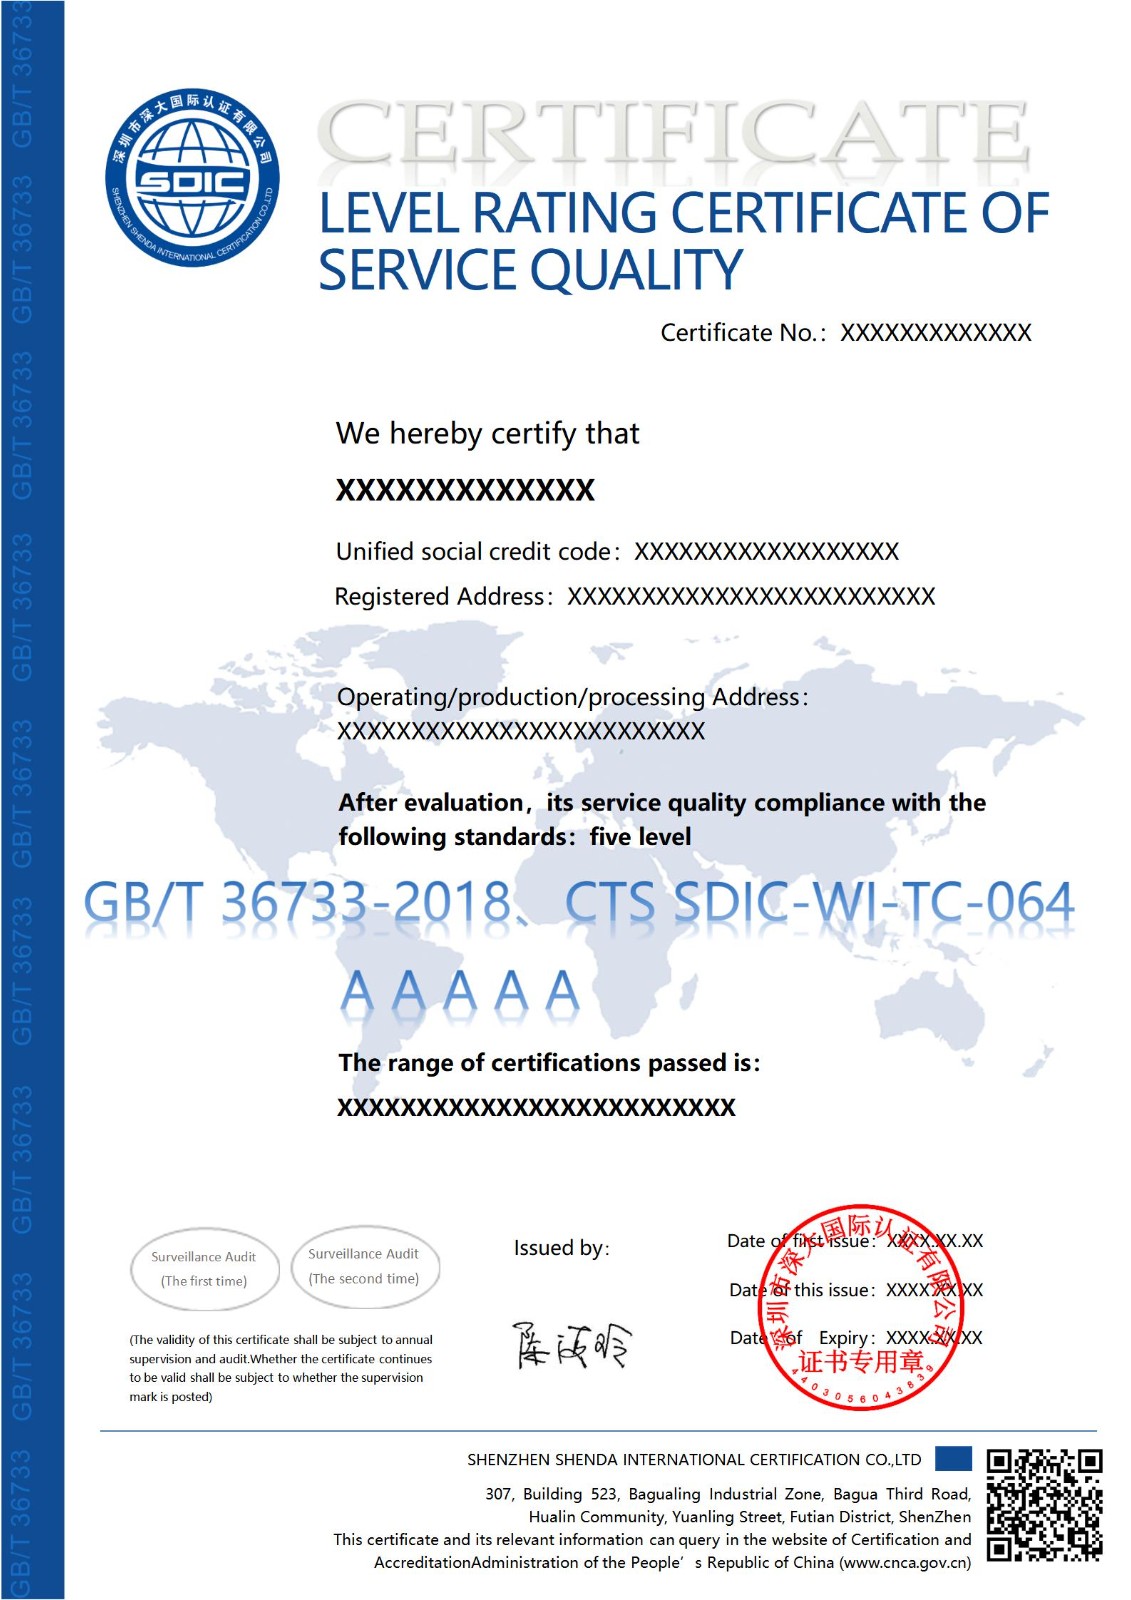 GB/T 36733 服务质量等级评价认证-英文版